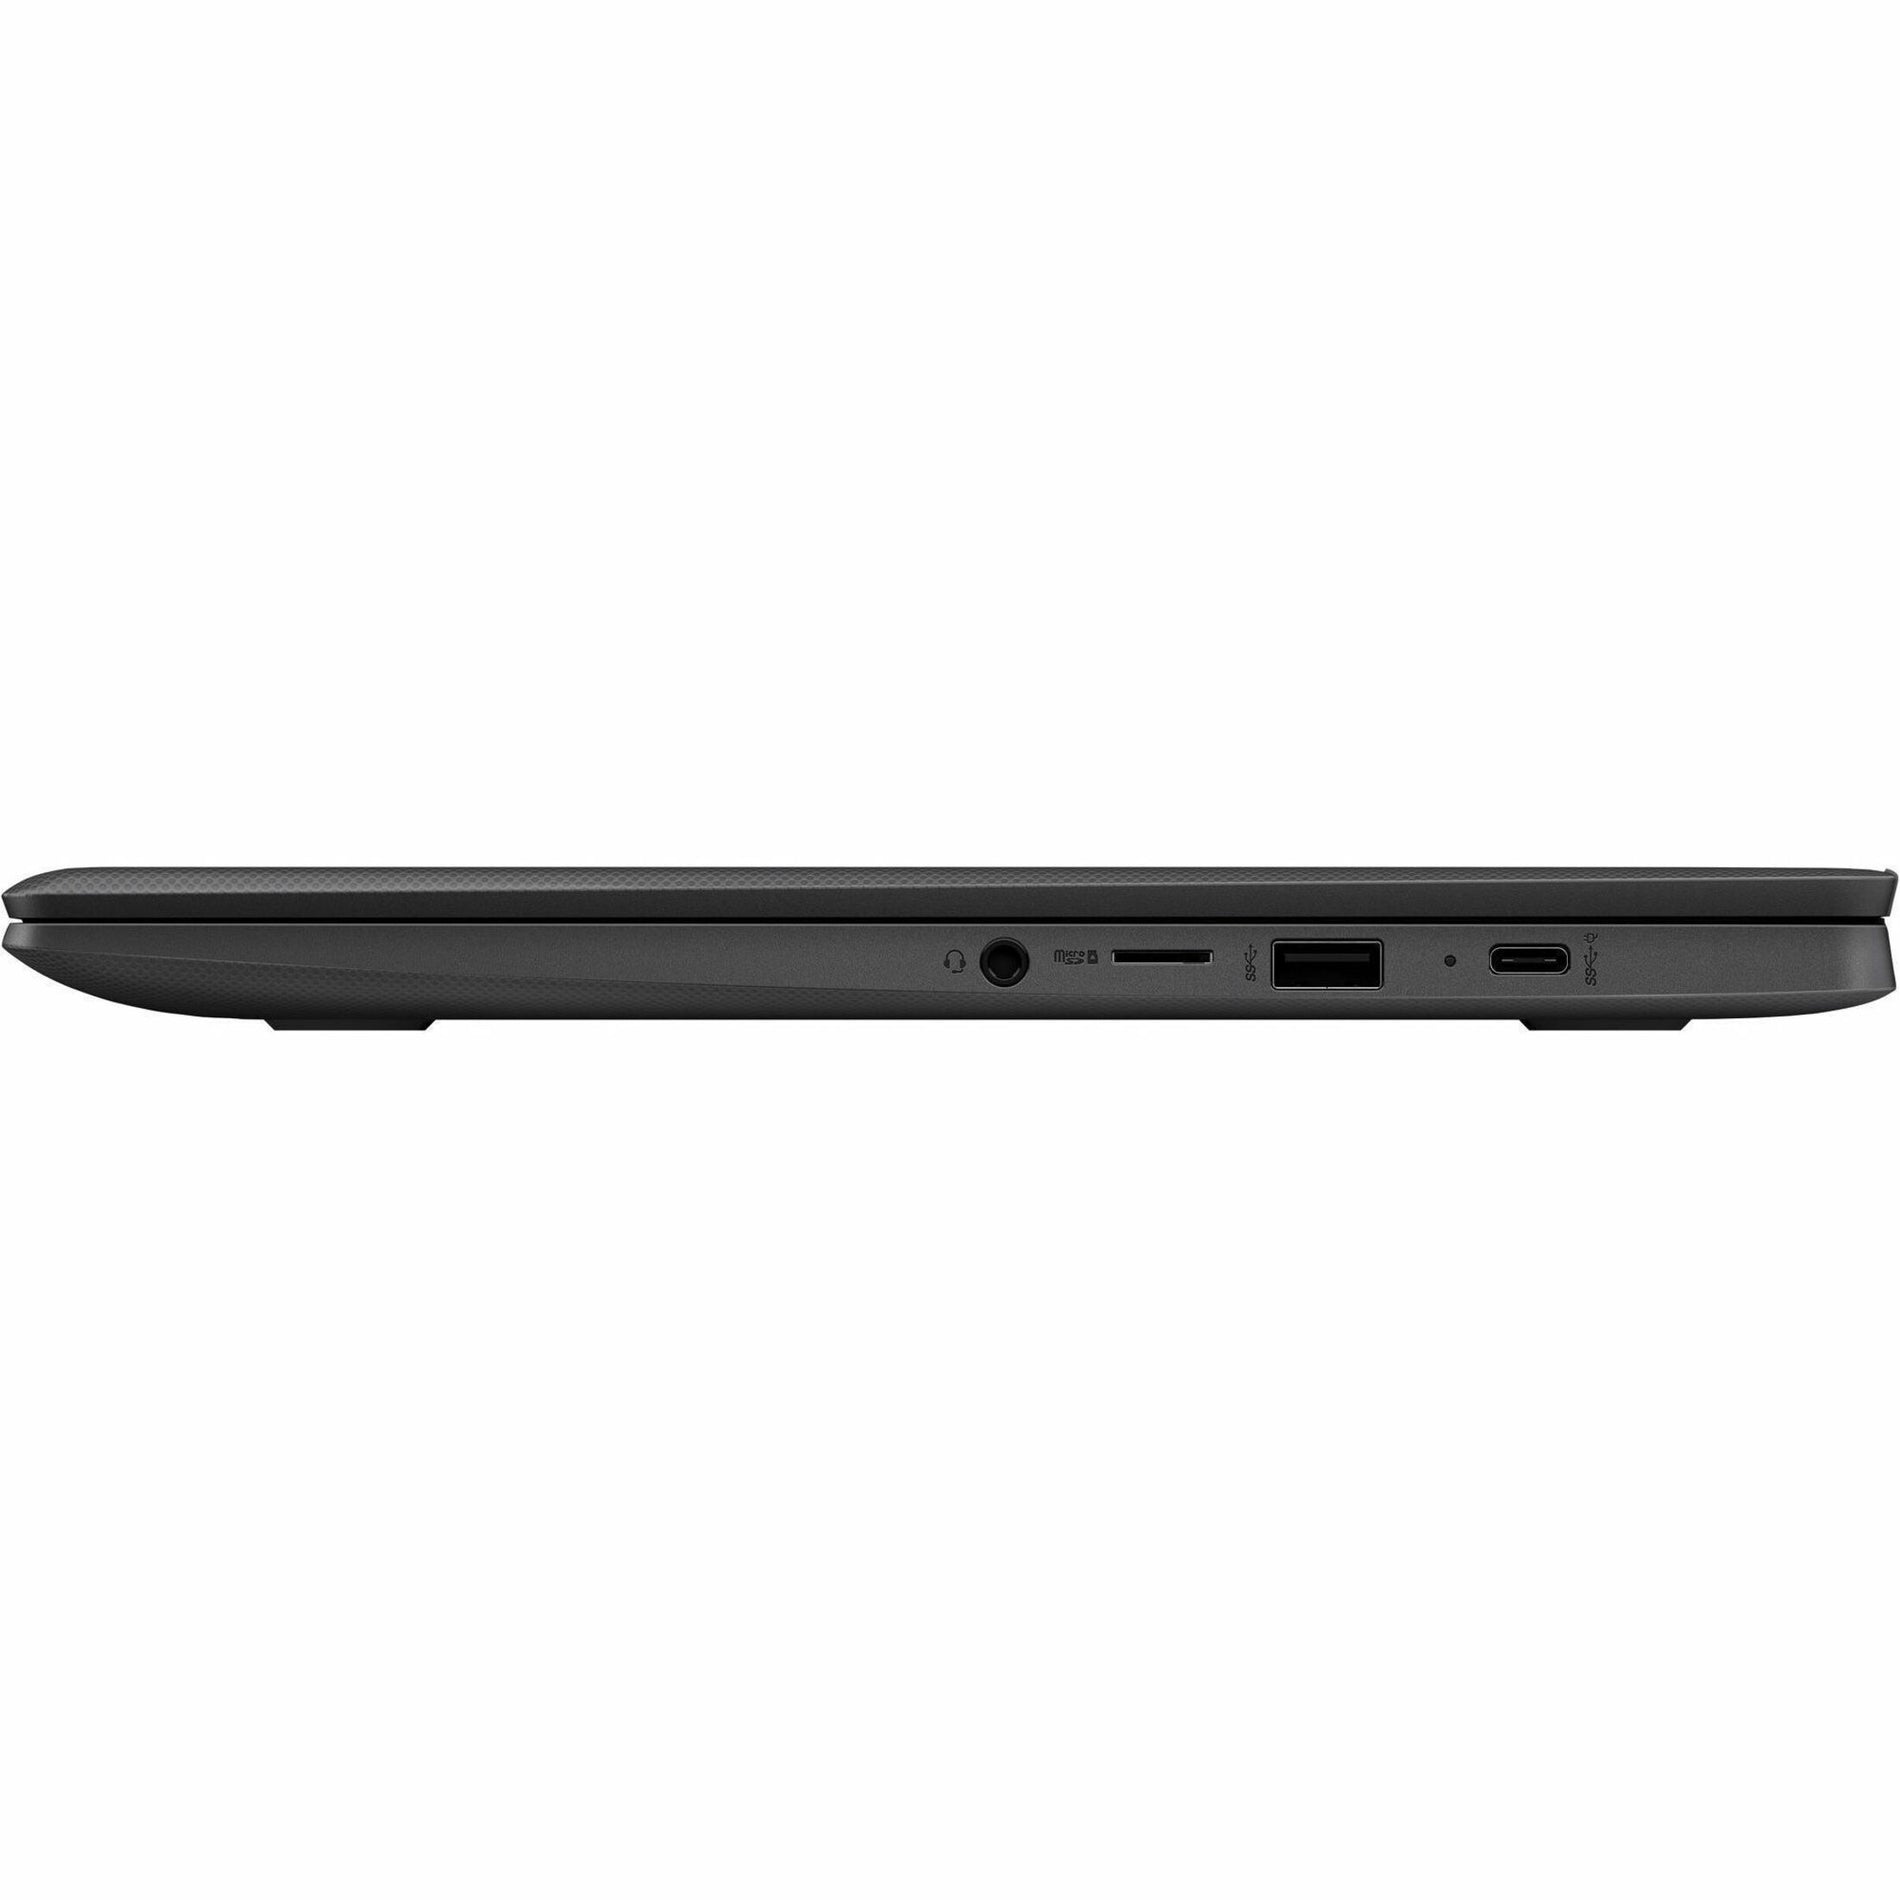 HPI SOURCING - NEW Chromebook 14 G6 14" Chromebook, HD, Intel Celeron N4020 Dual-core, 4GB RAM, 32GB Flash Memory, Chalkboard Gray